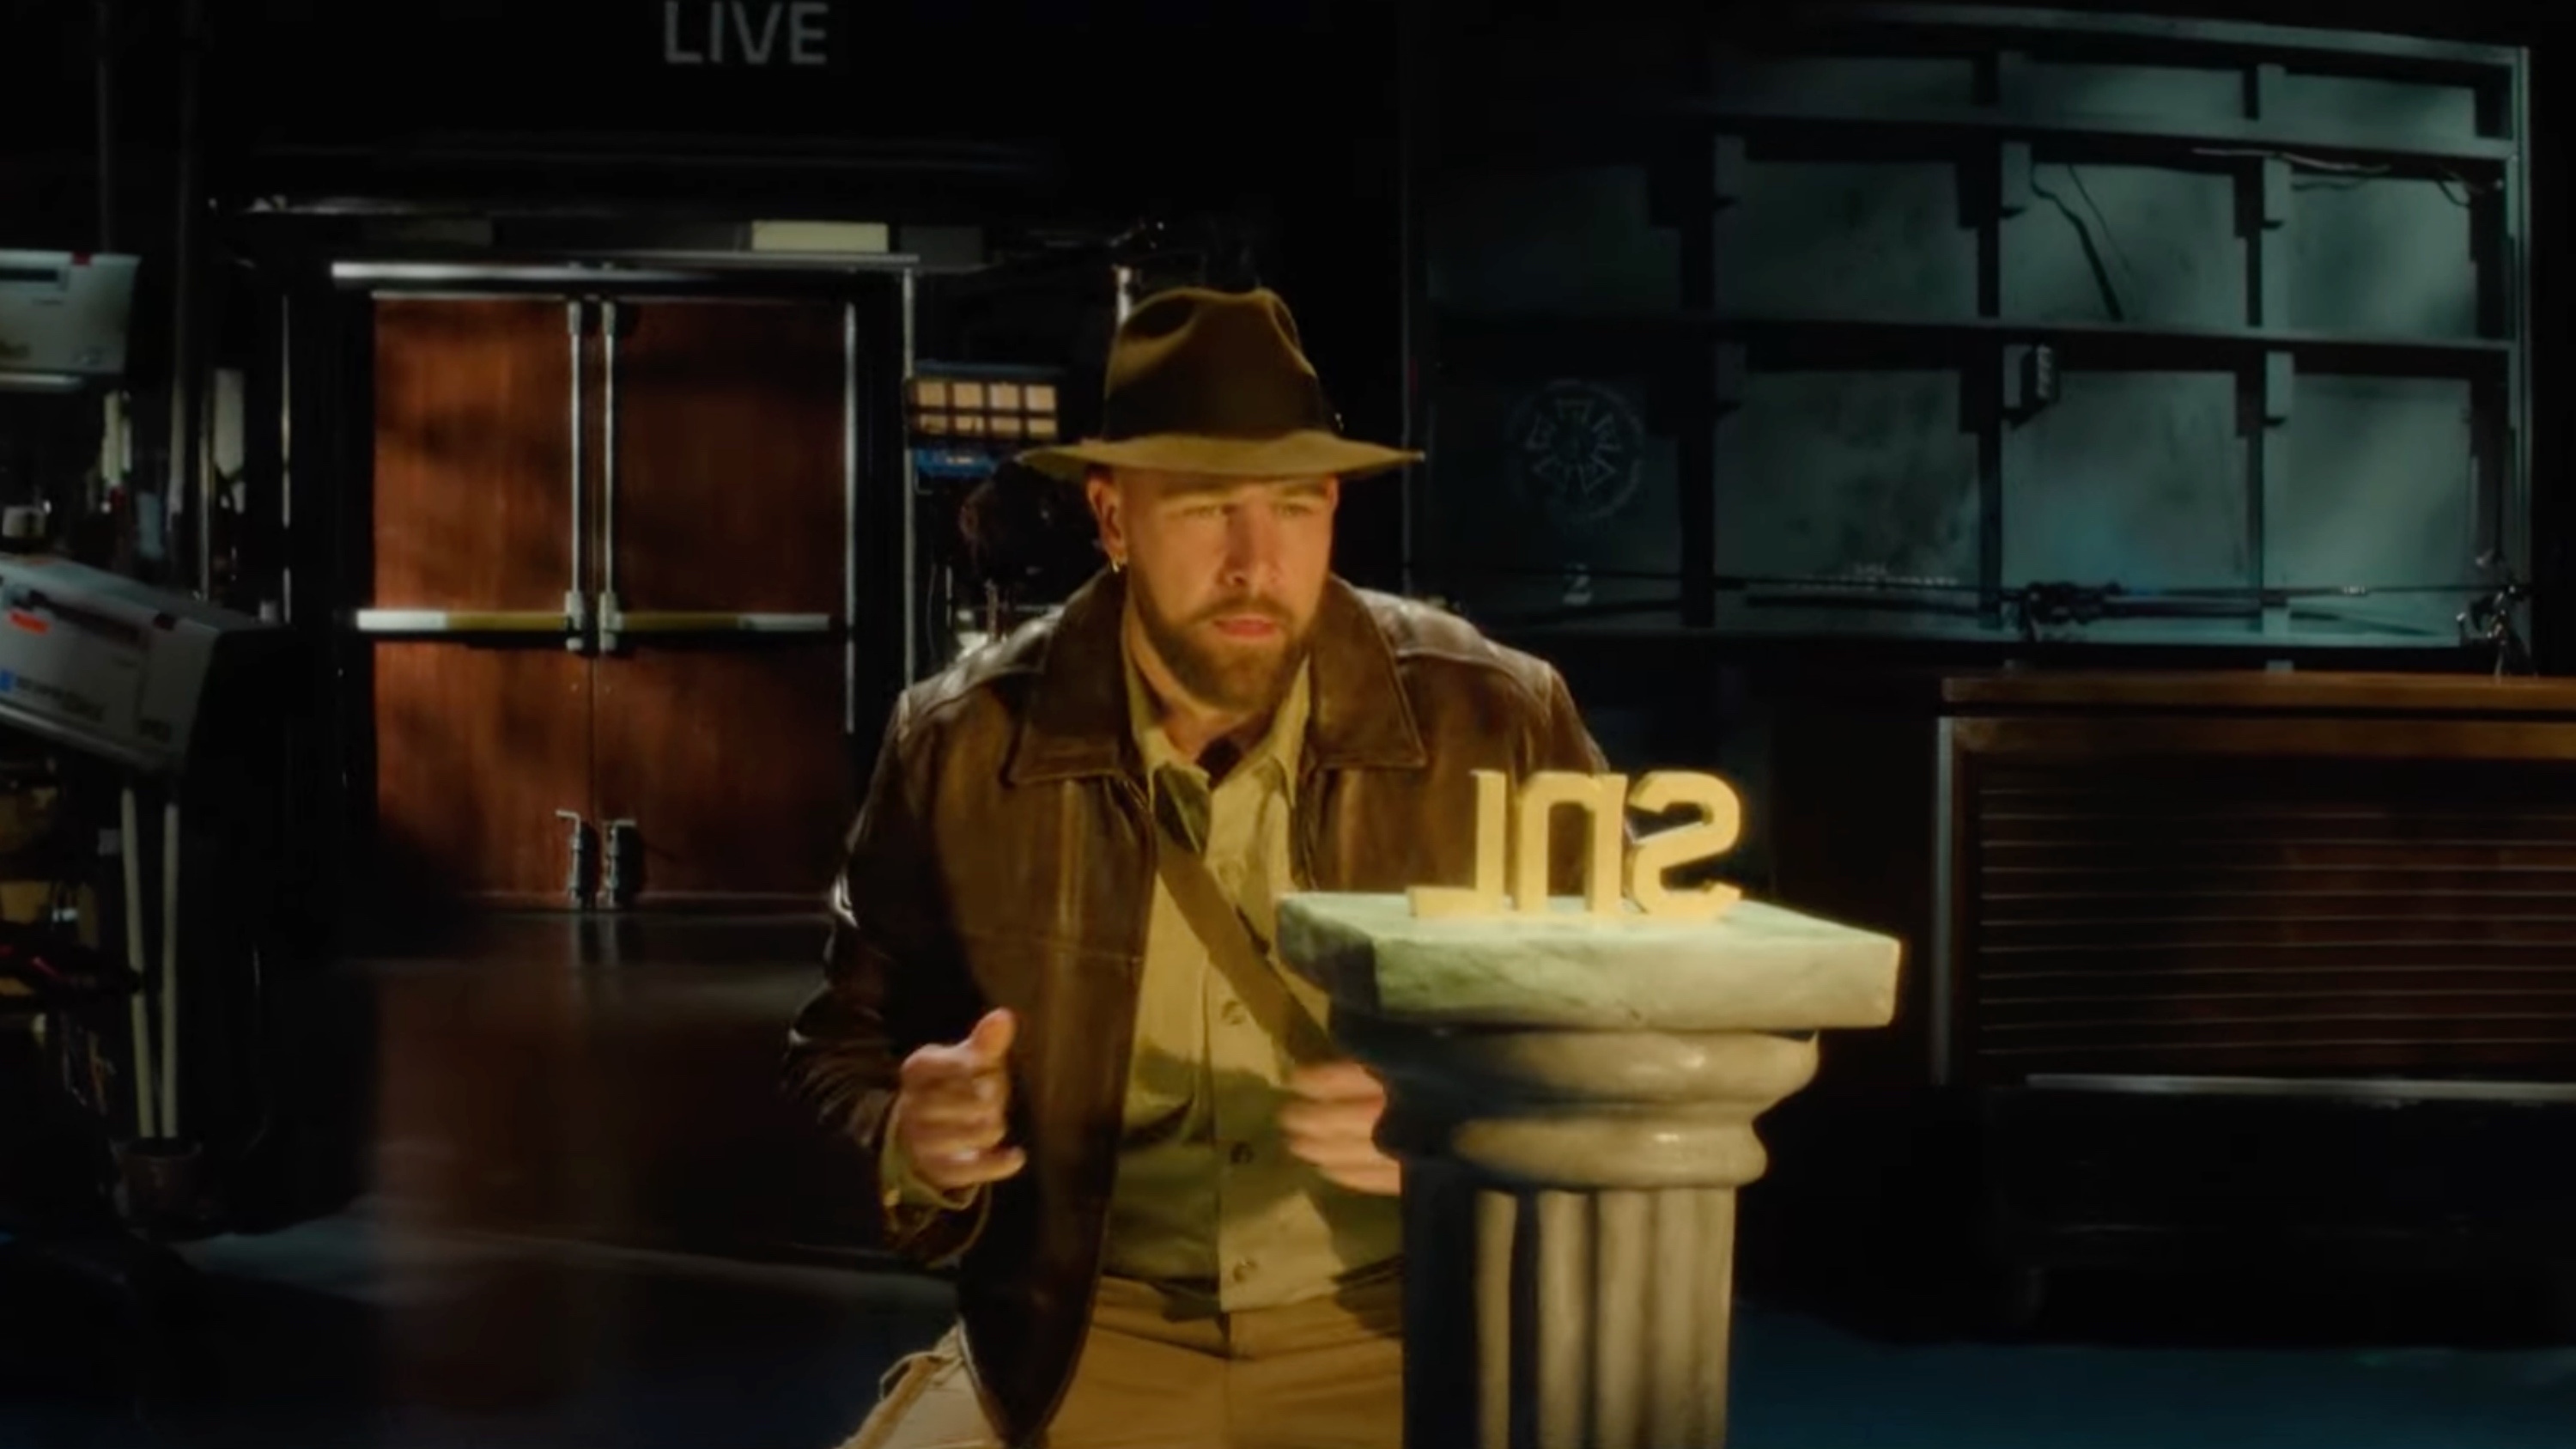 Travis Kelce SNL promo as Indiana Jones